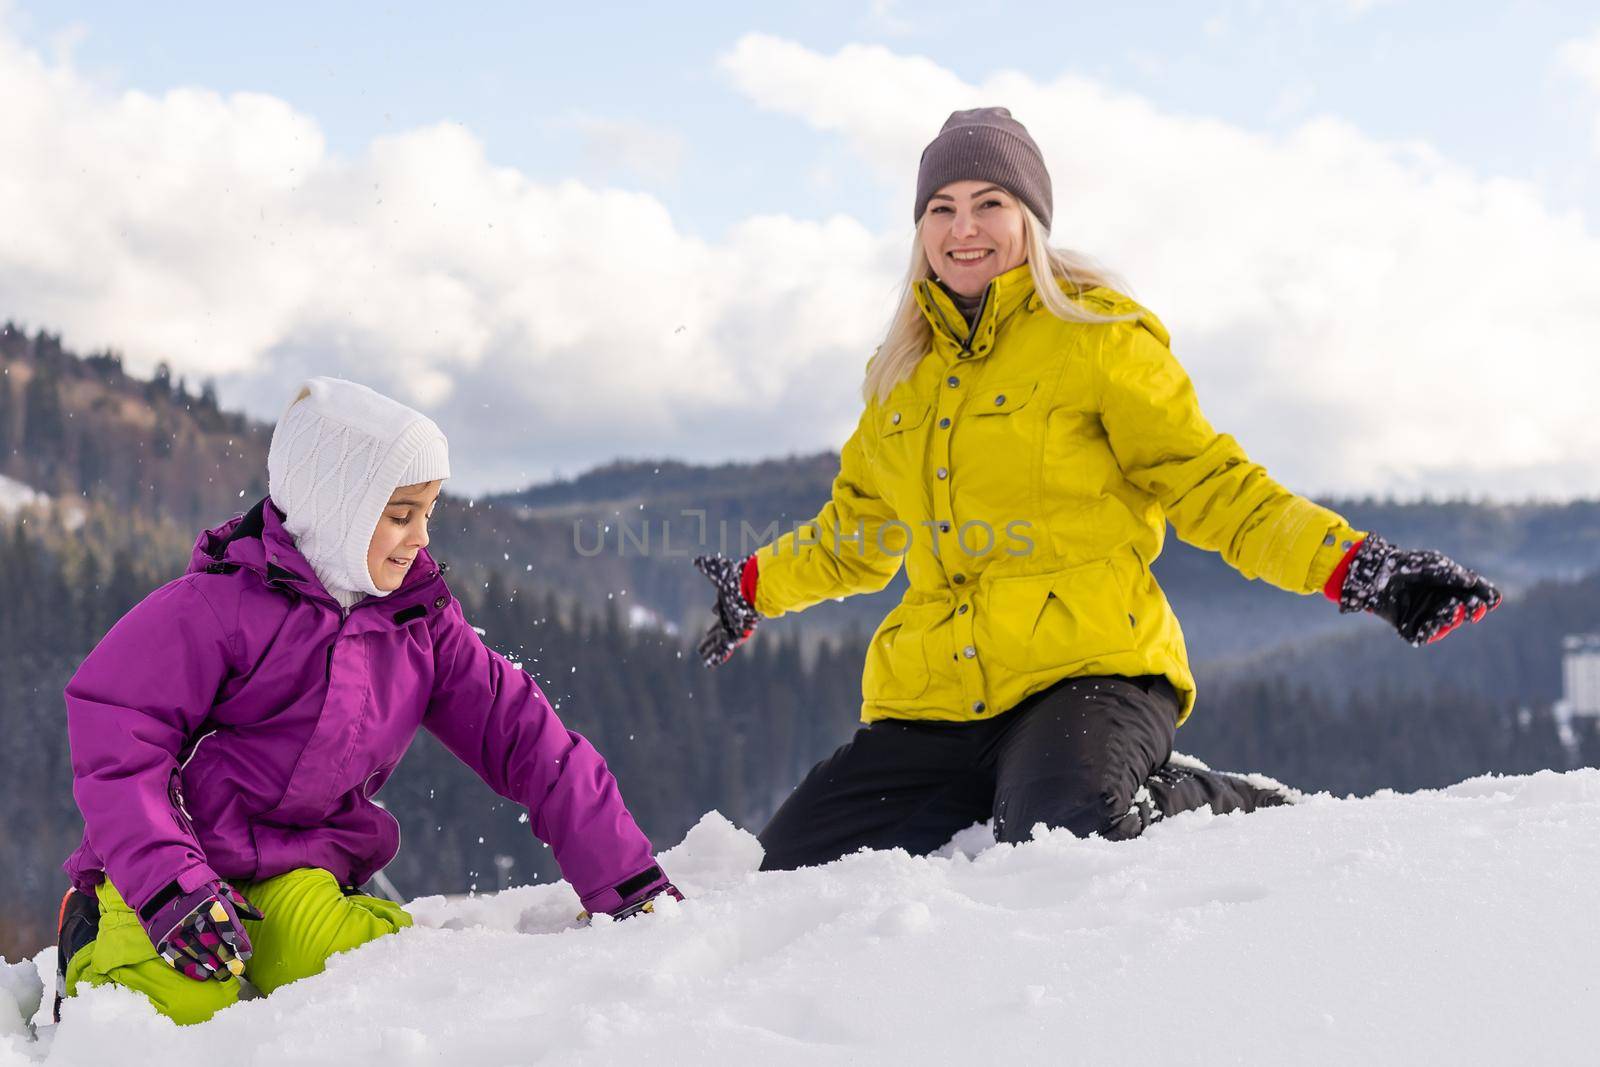 Winter,ski, snow and sun - family enjoying winter vacation